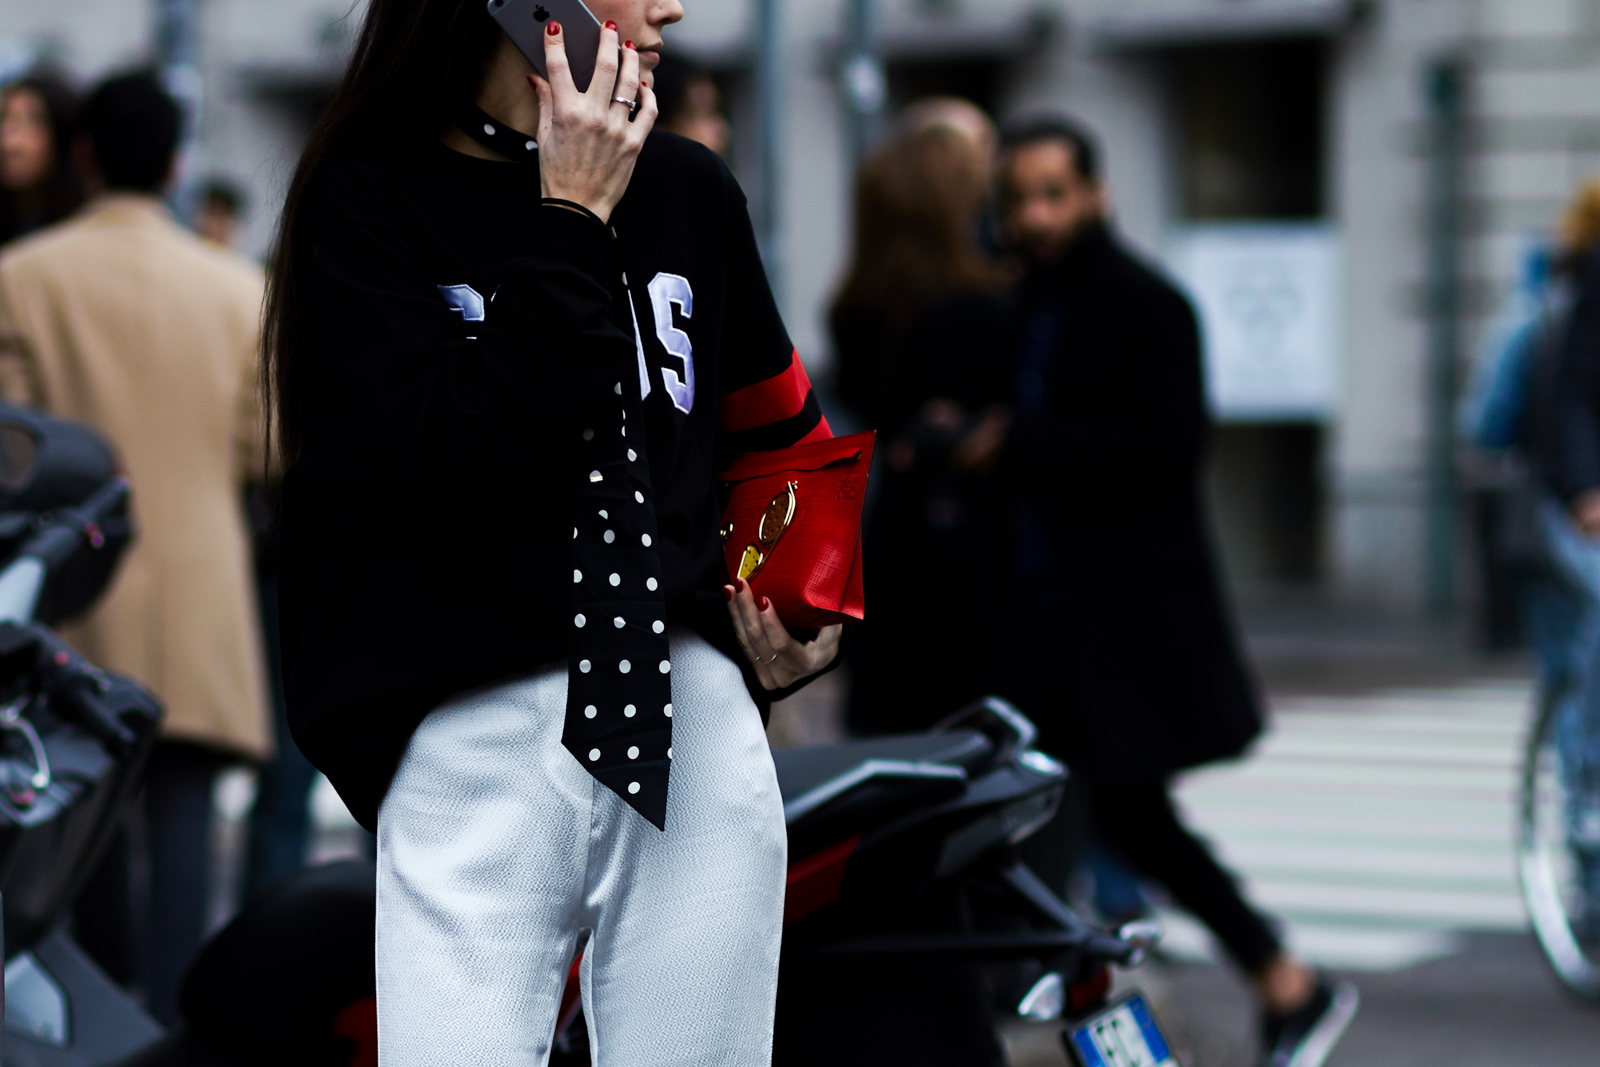 MFW Street Style: Italian stylist Diletta Bonaiuti talking on the phone wearing a black GCDS sweatshirt, polka dot scarf and red Loewe clutch bag in Milan